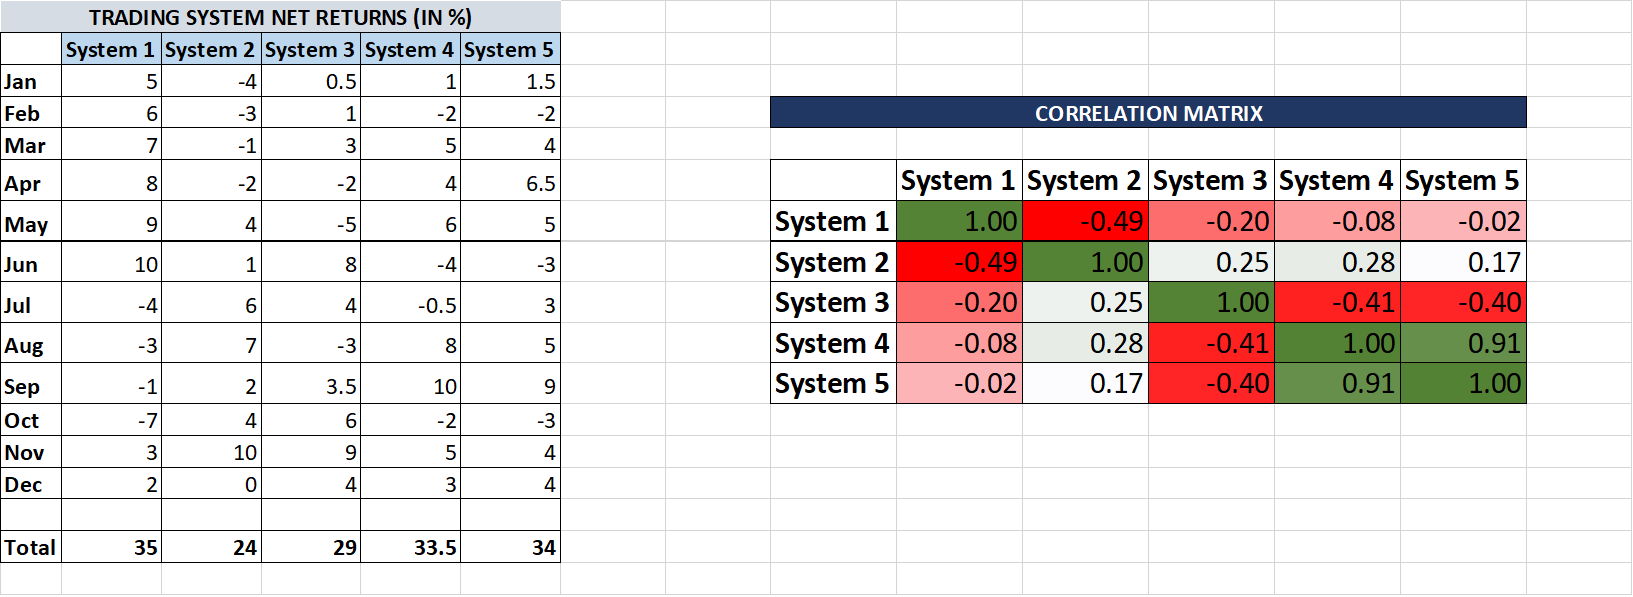 Correlation-Matrix-of-Trading-Systems-1